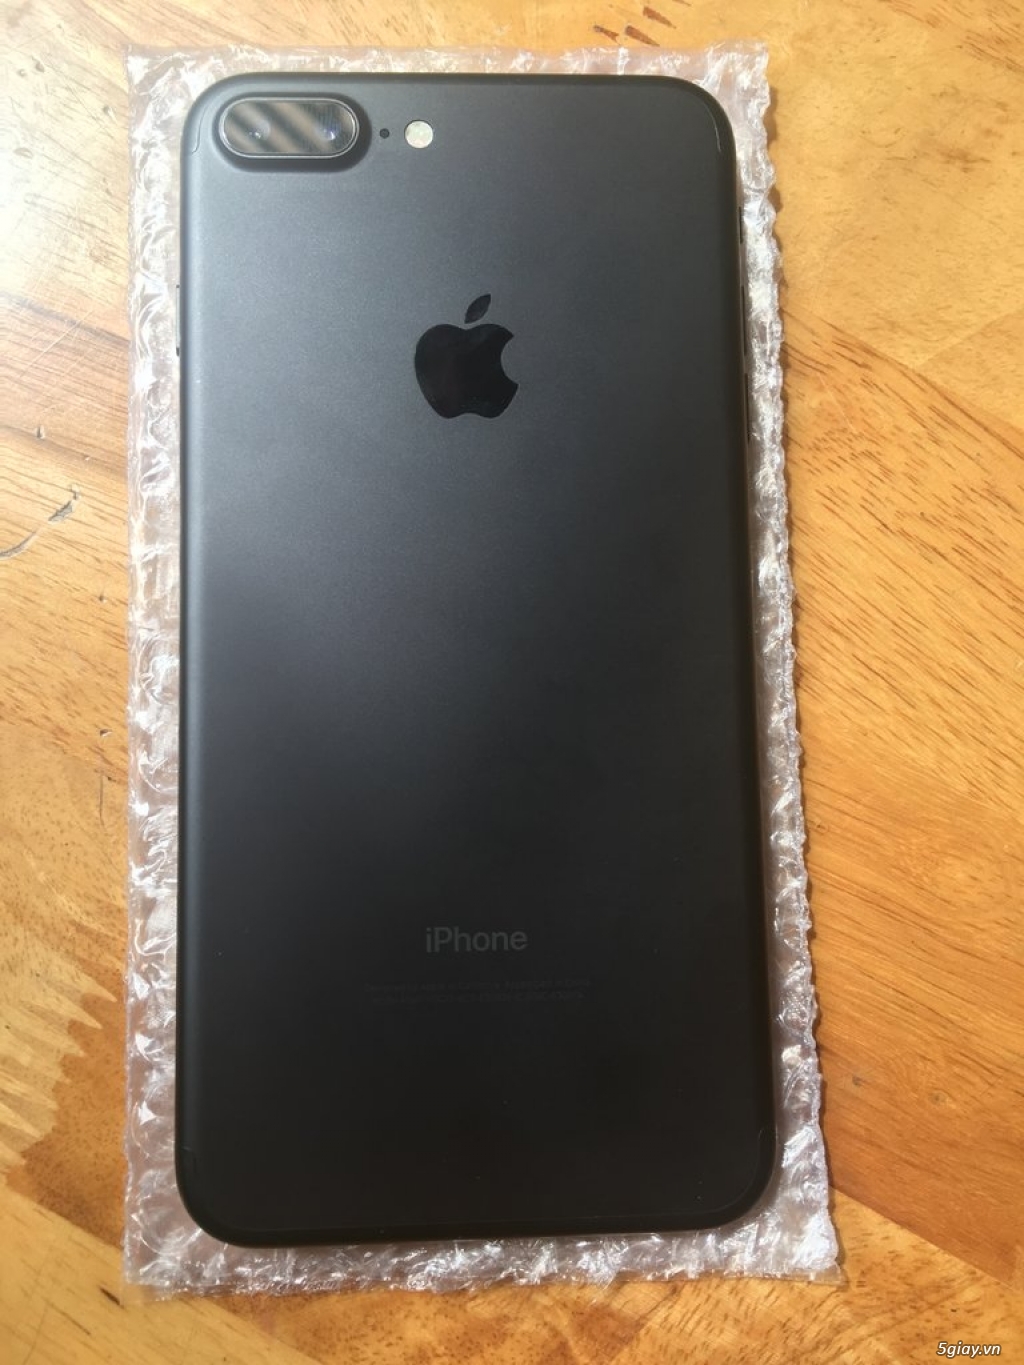 iphone 7+ 128g black (active icloud) - 2